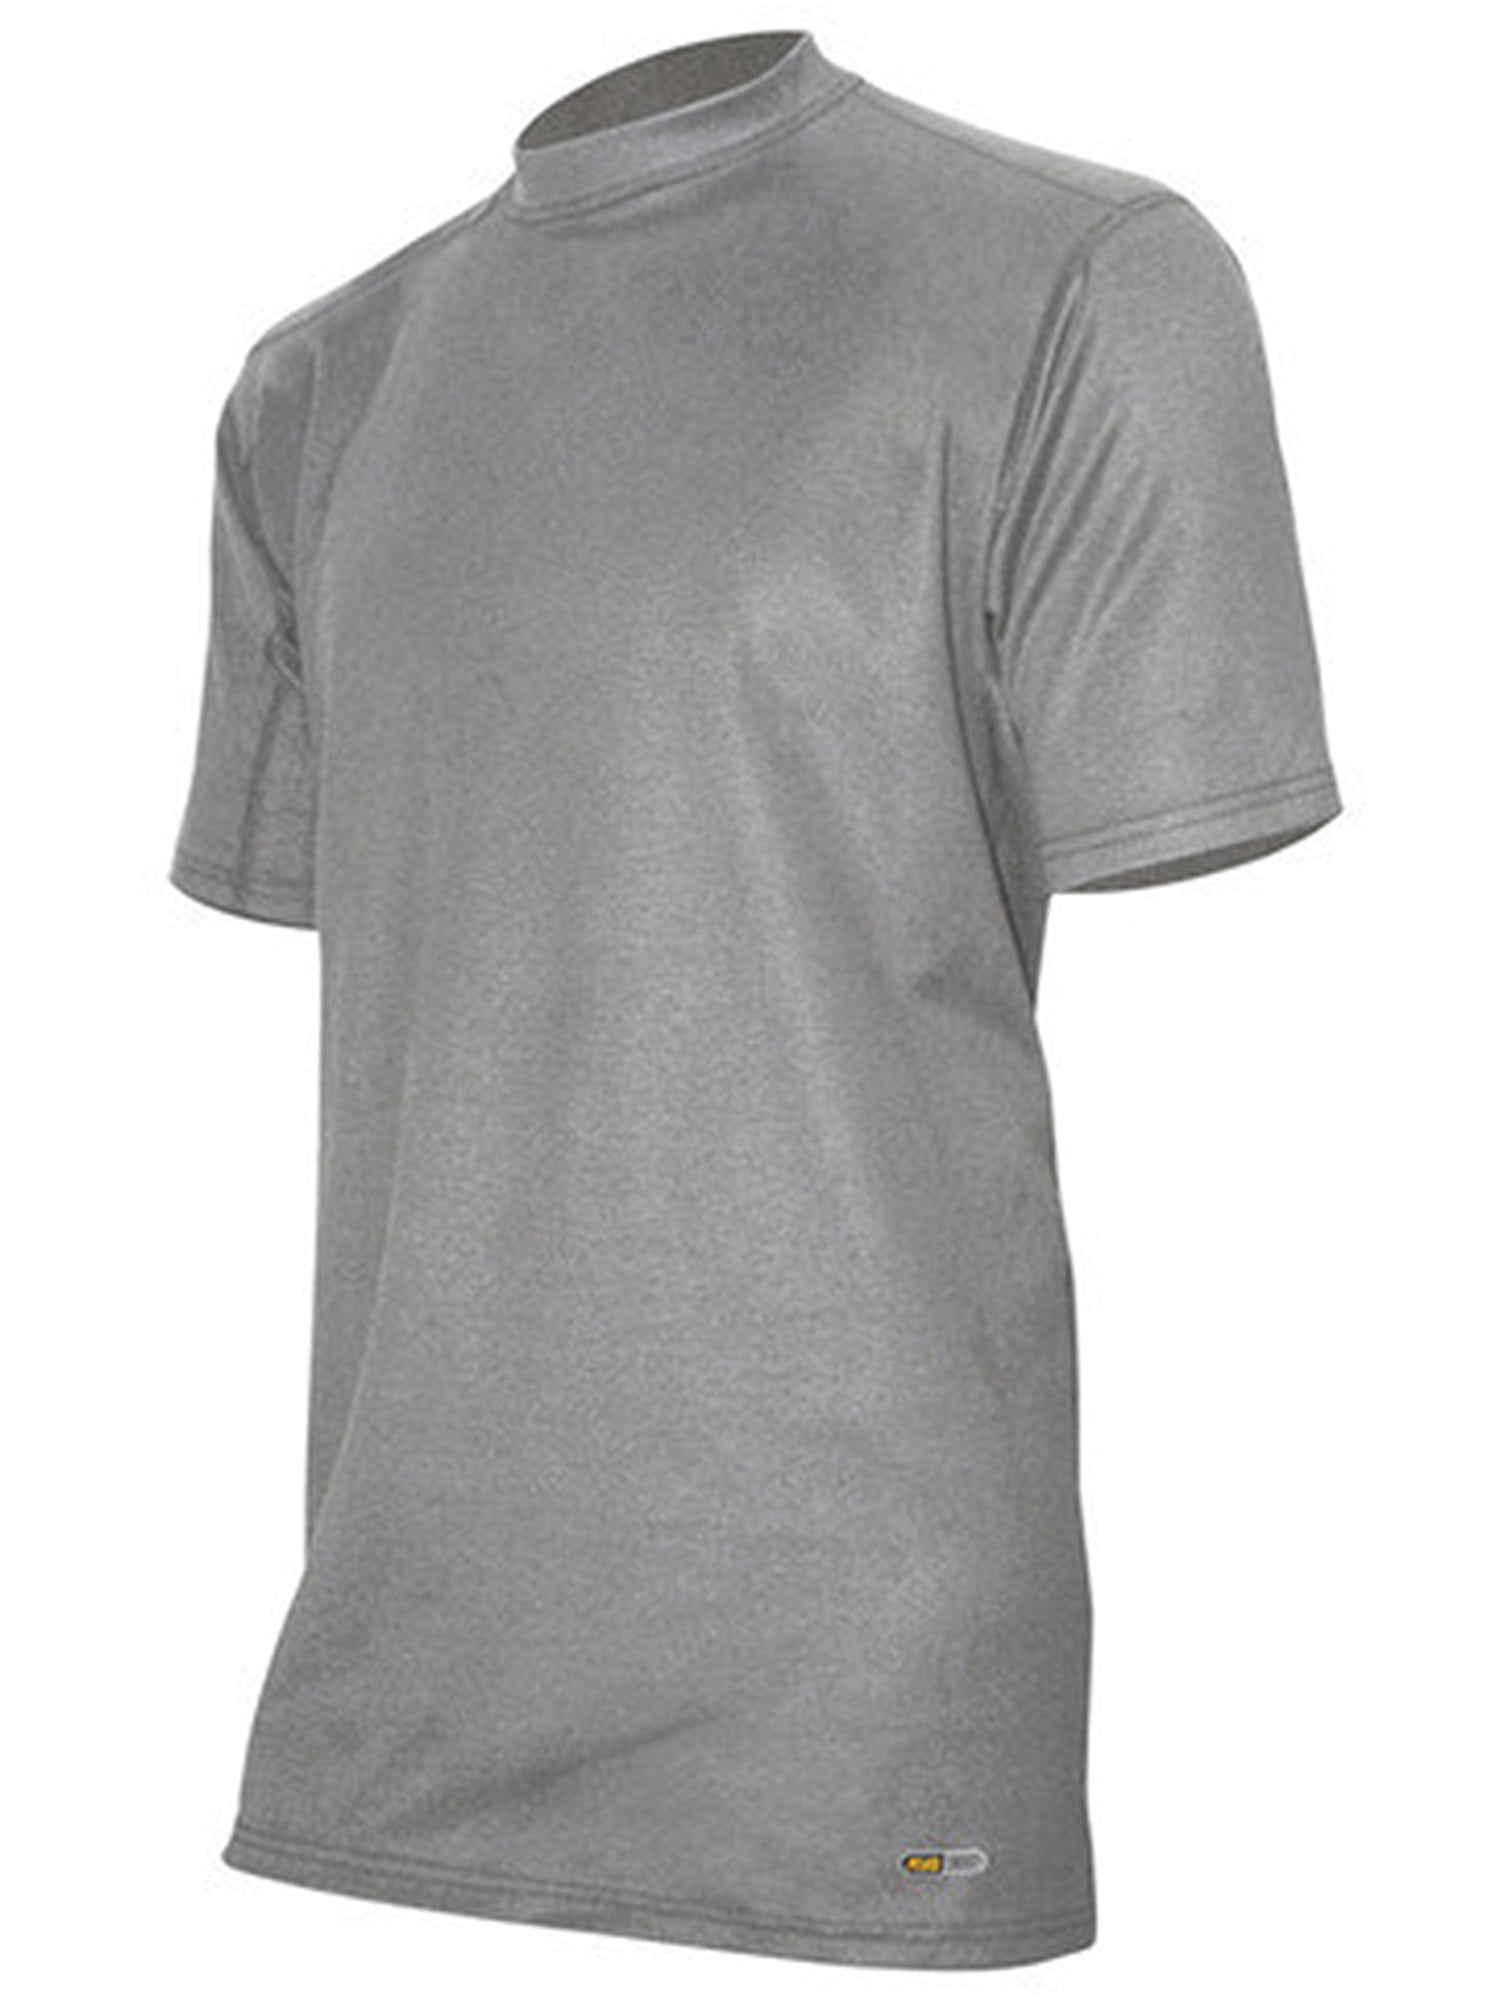 AYG Men's Extra Dry Short Sleeve Crew Casual Shirt Charcoal L - Walmart.com